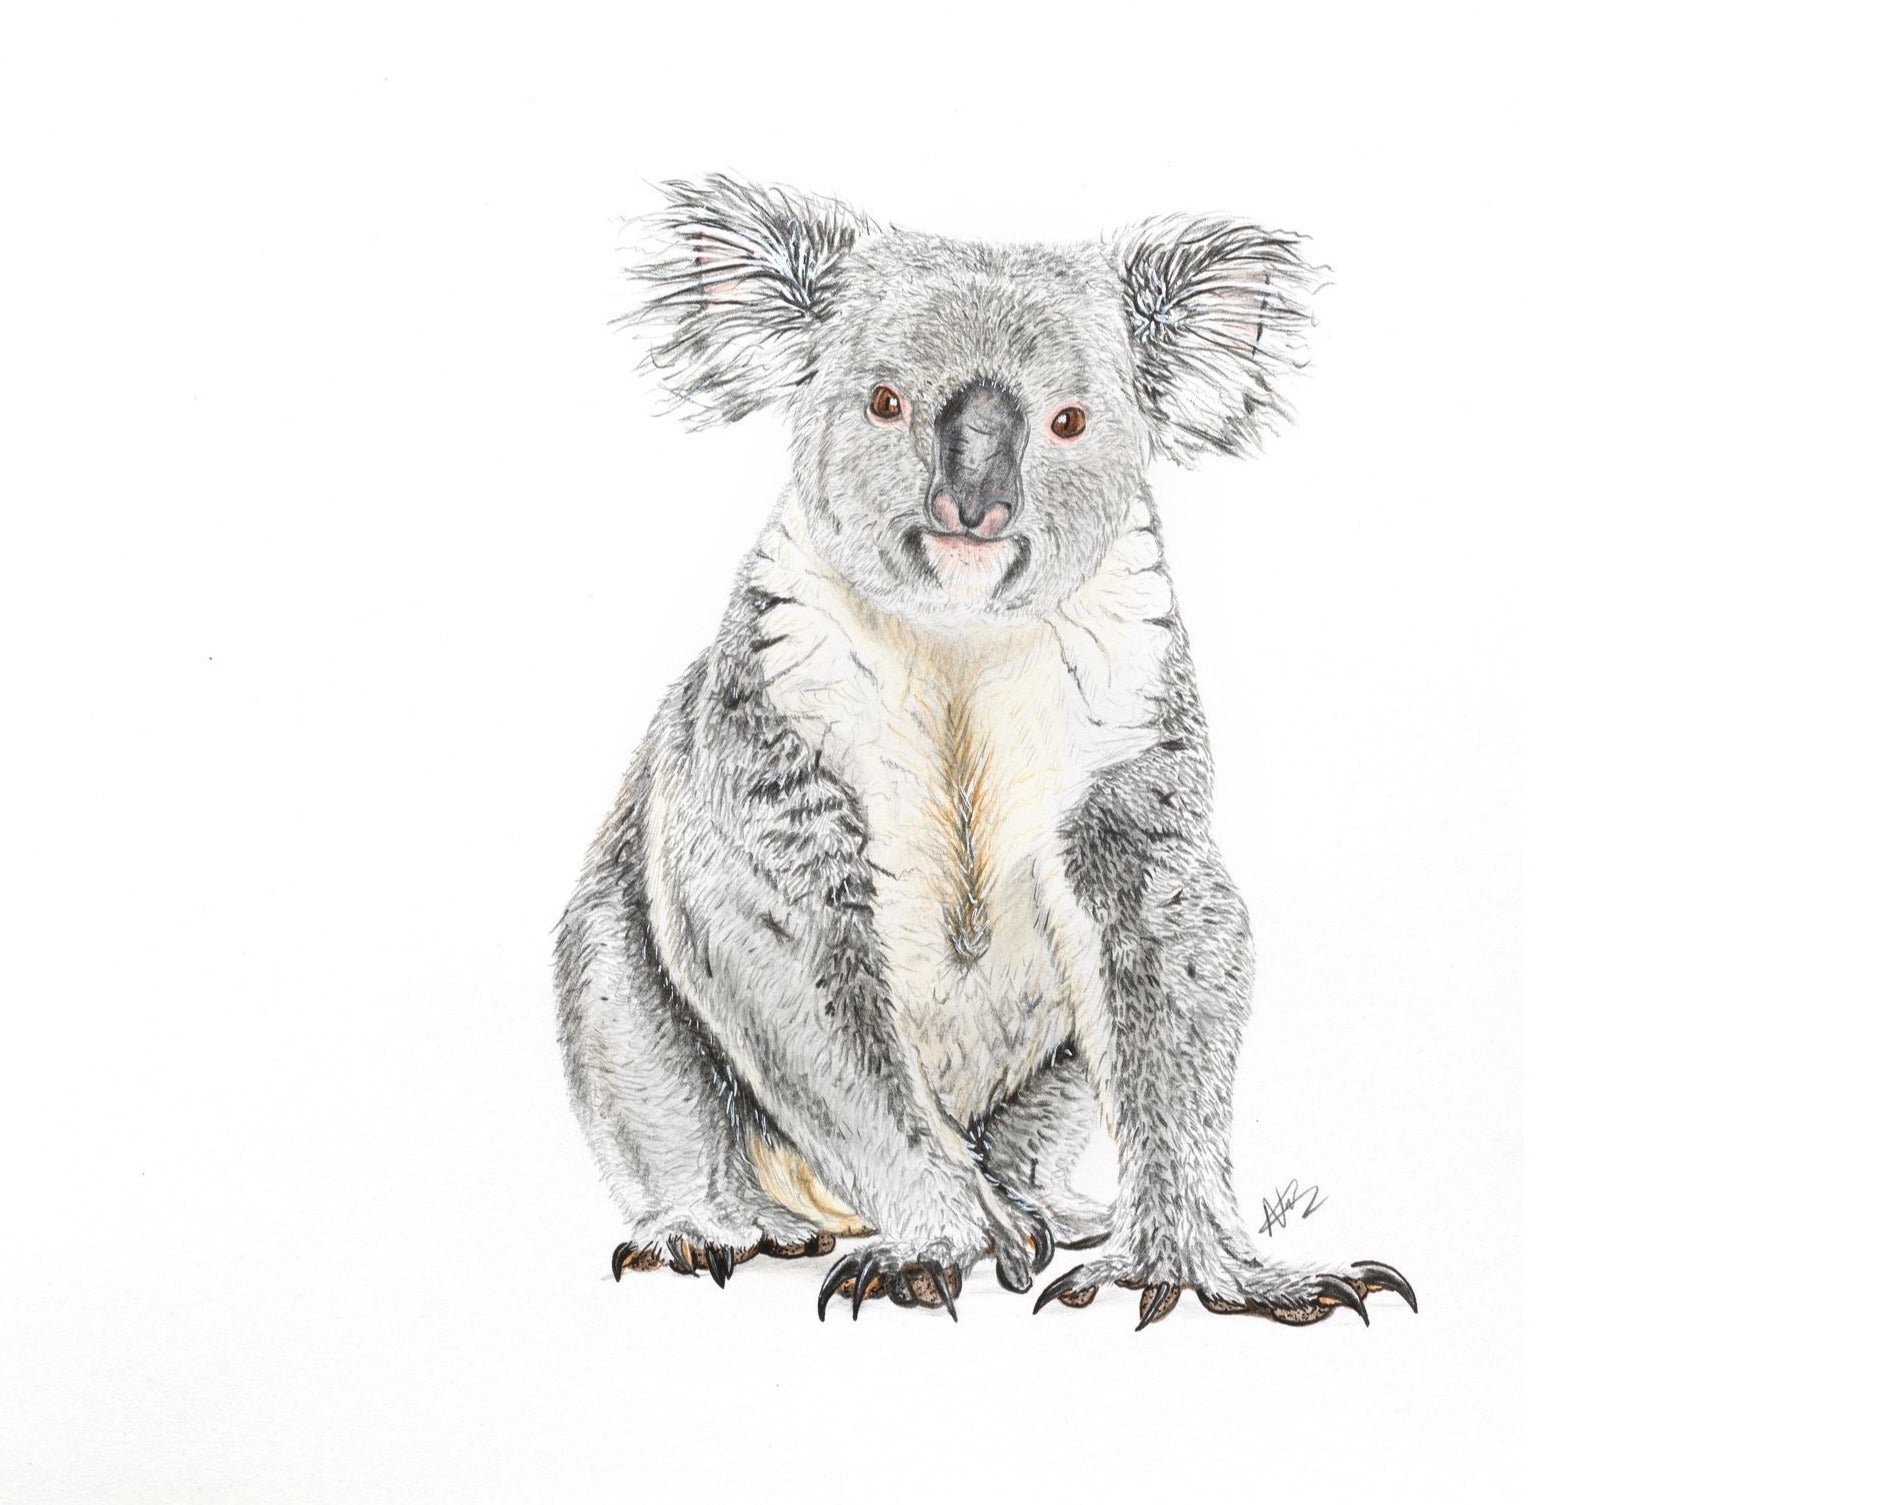 Koala bear, an art print by Natalia (Nátt) P. - INPRNT